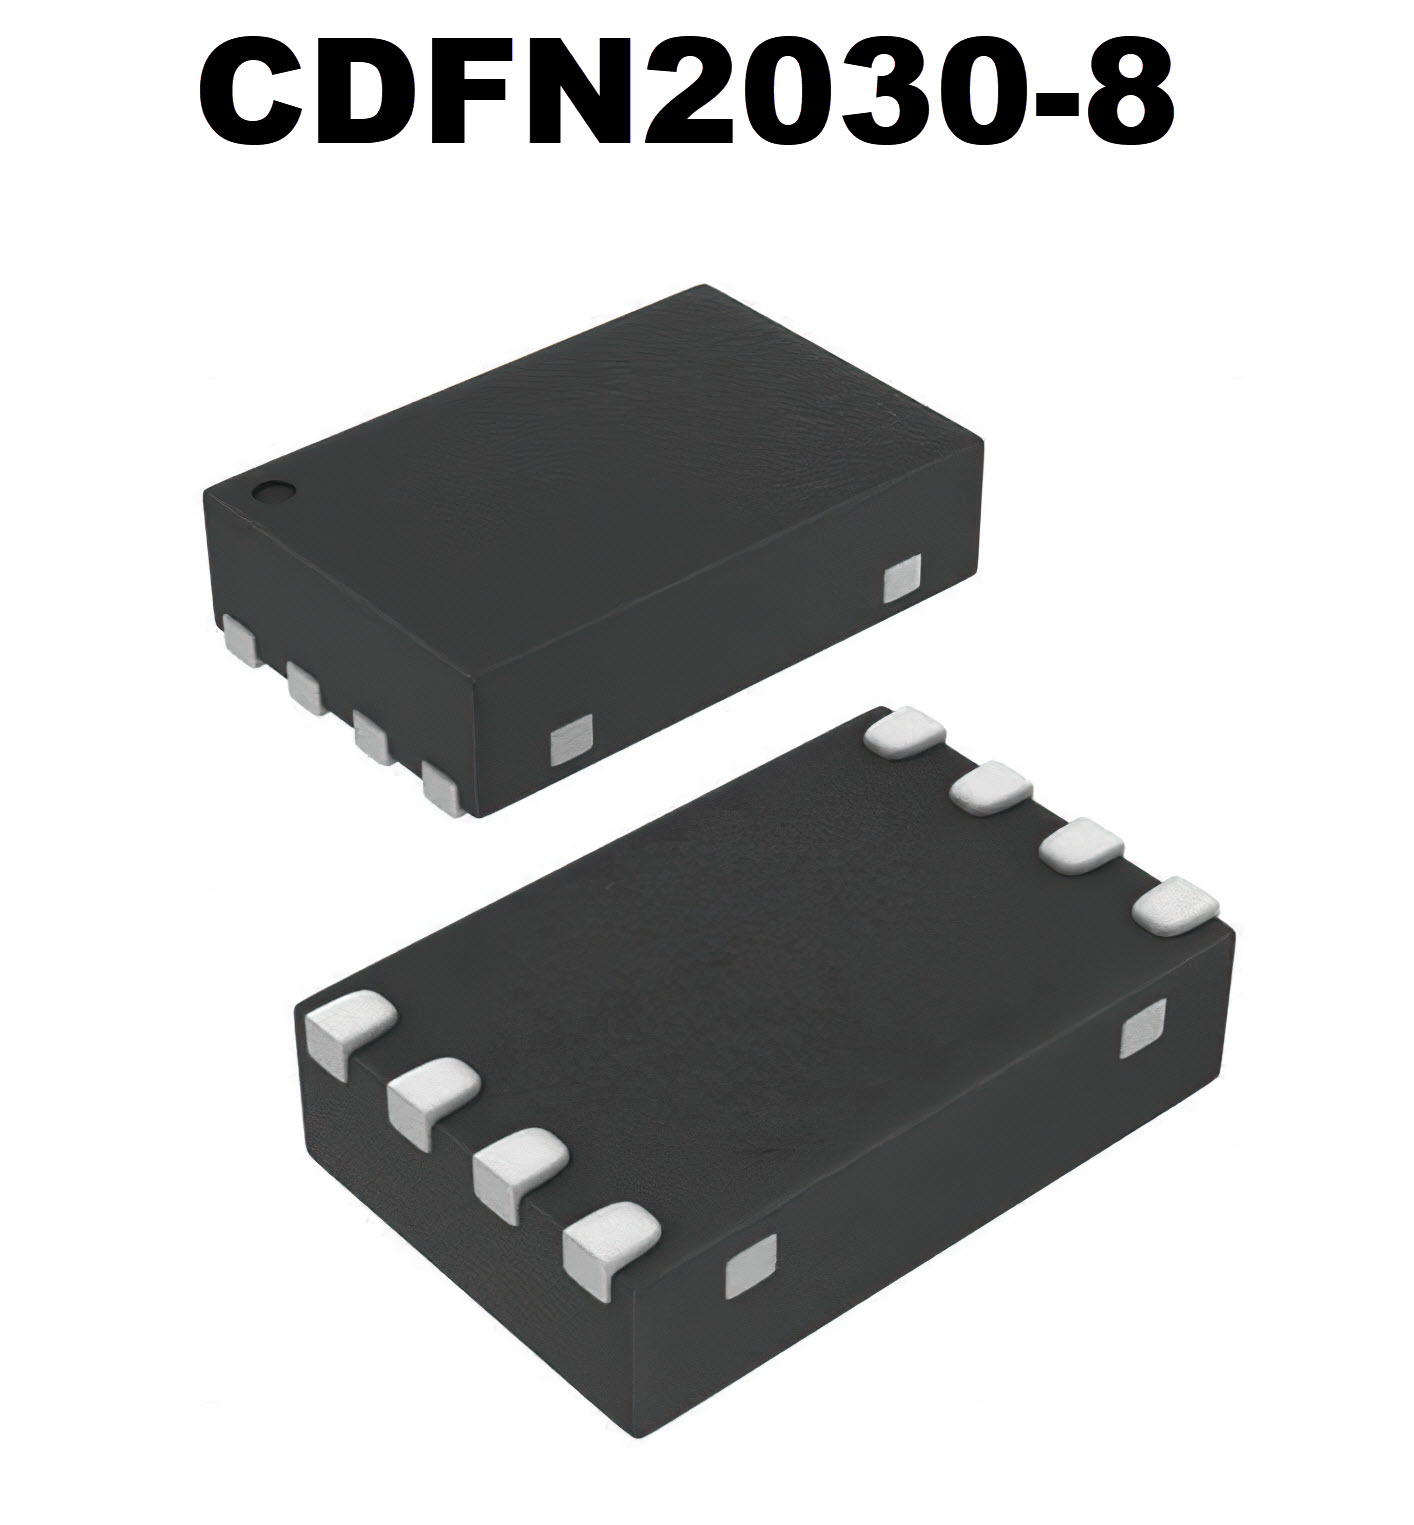 CDFN2030-8